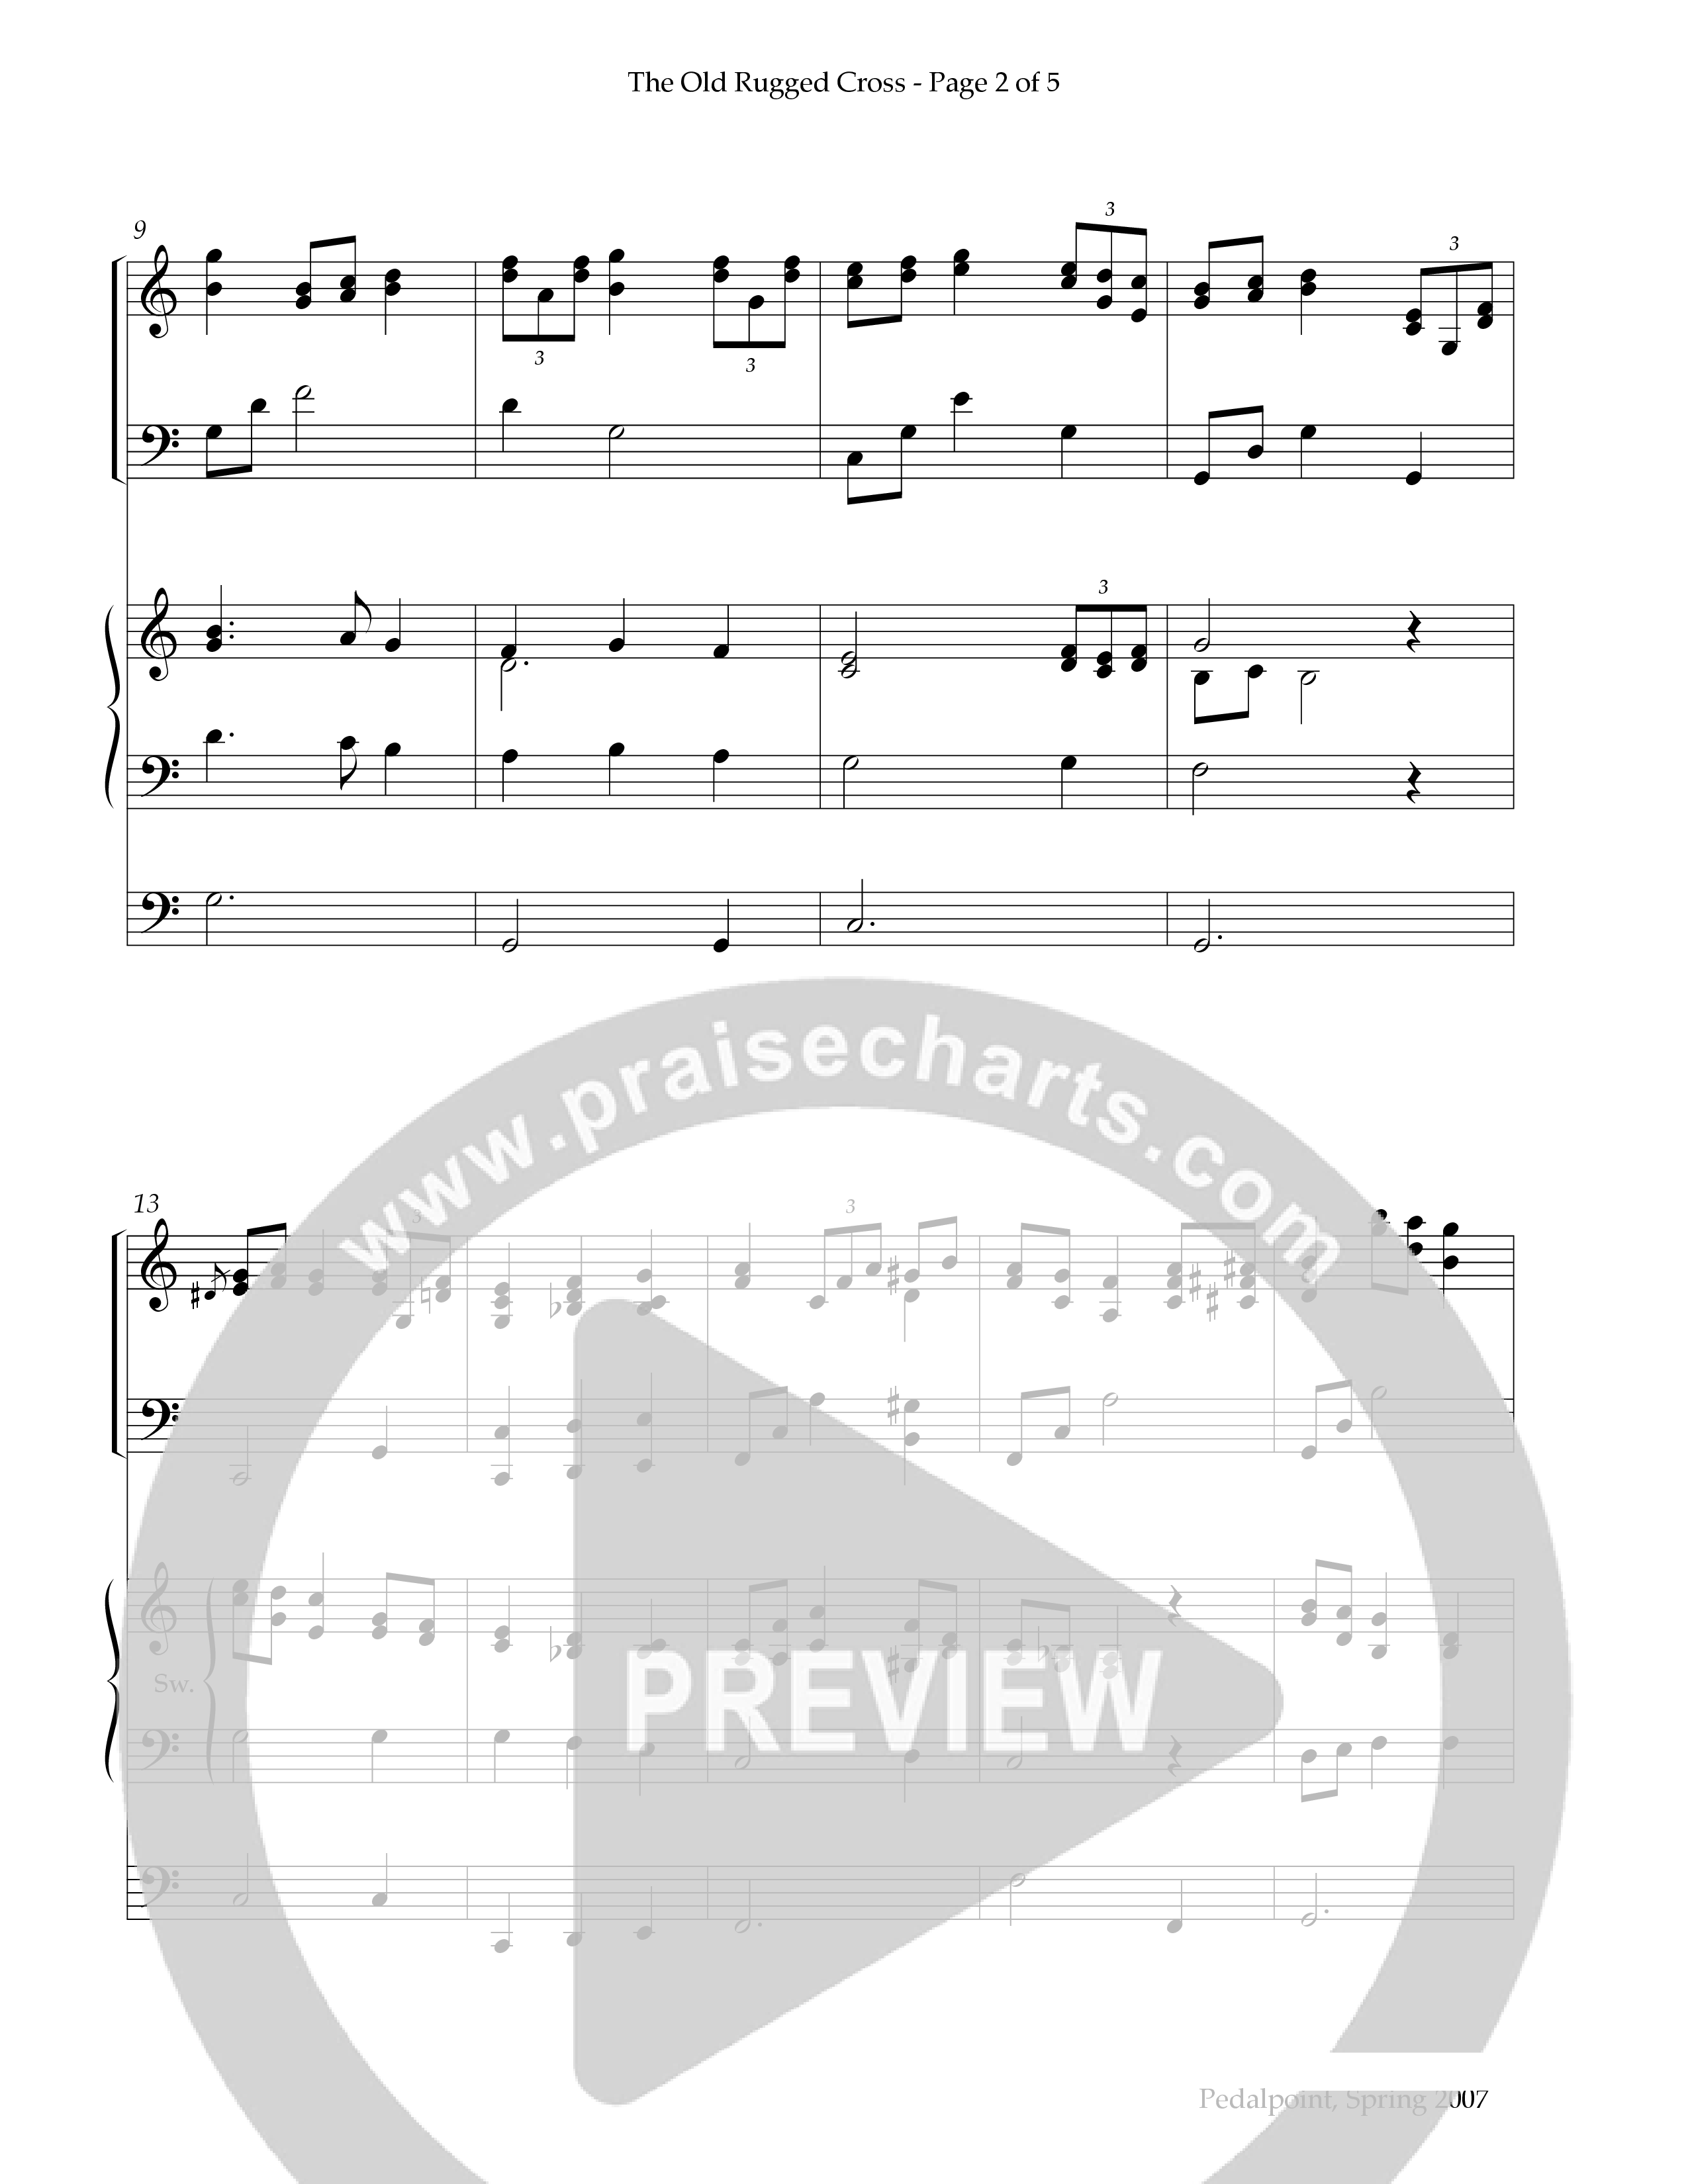 The Old Rugged Cross (Instrumental) Piano-Organ (Lifeway Worship / Arr. Stan Pethel / Arr. James Pethel)